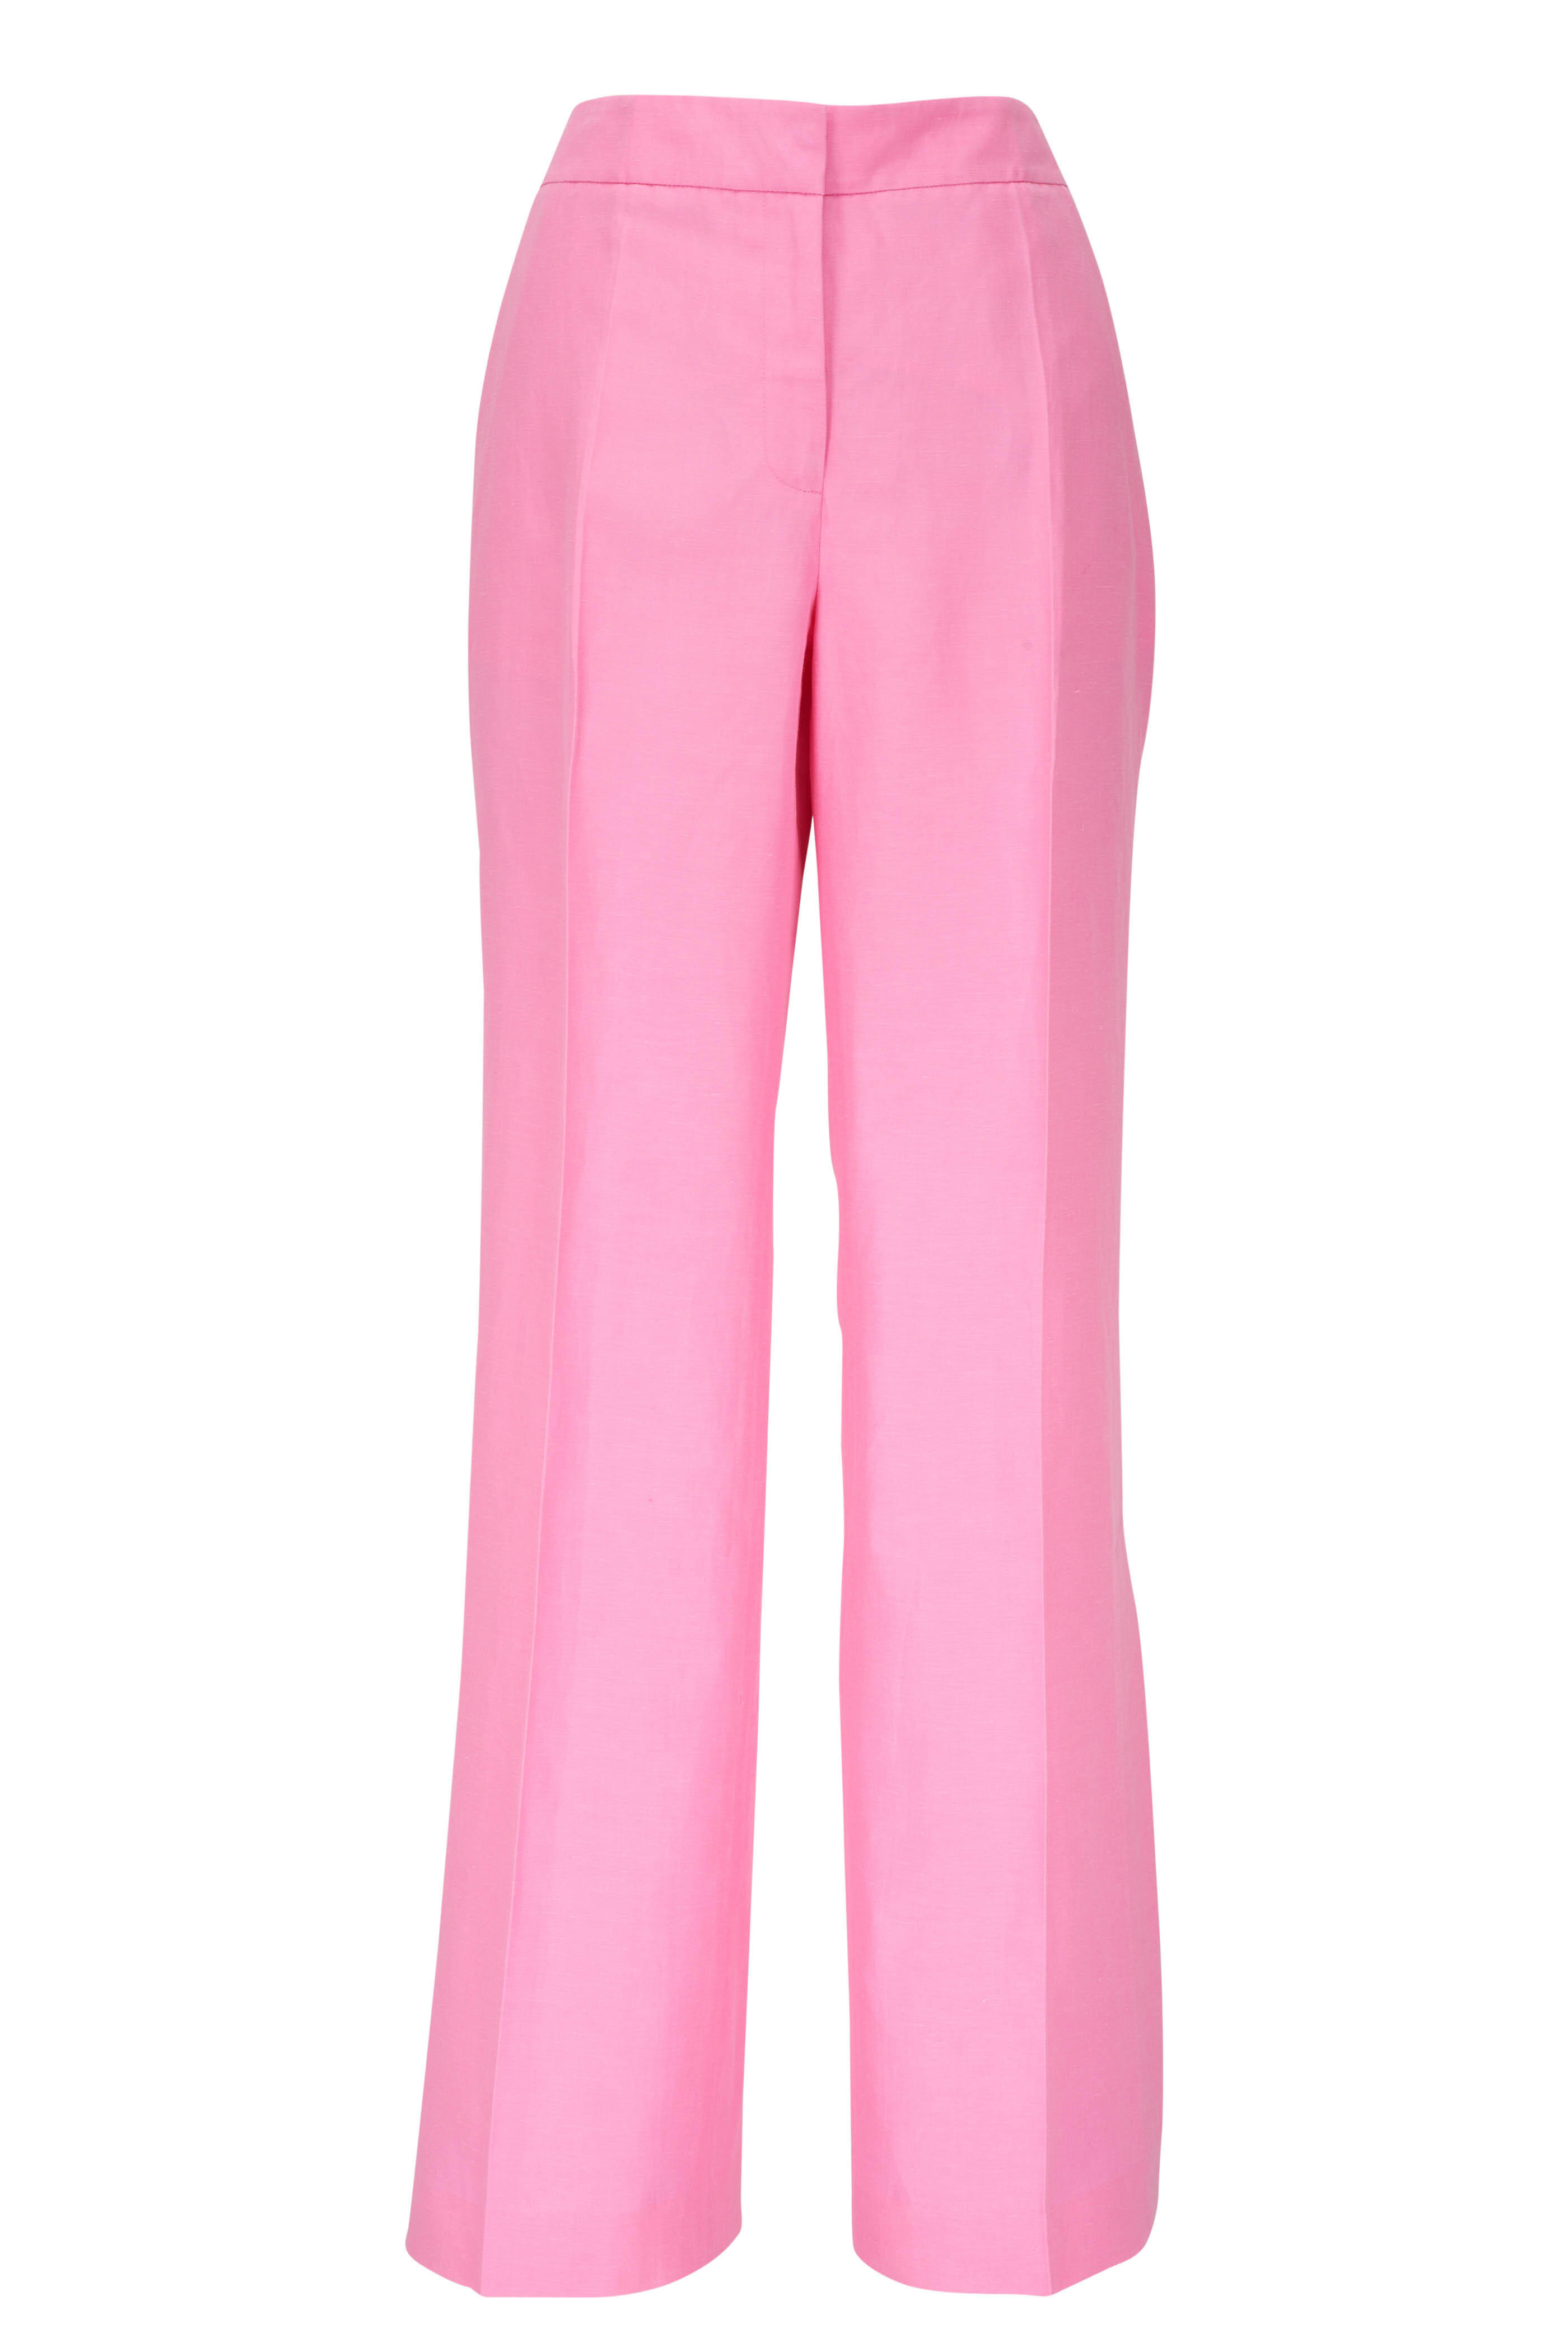 Lafayette 148 New York - Gates Pink Silk & Linen Side Slit Flared Pant